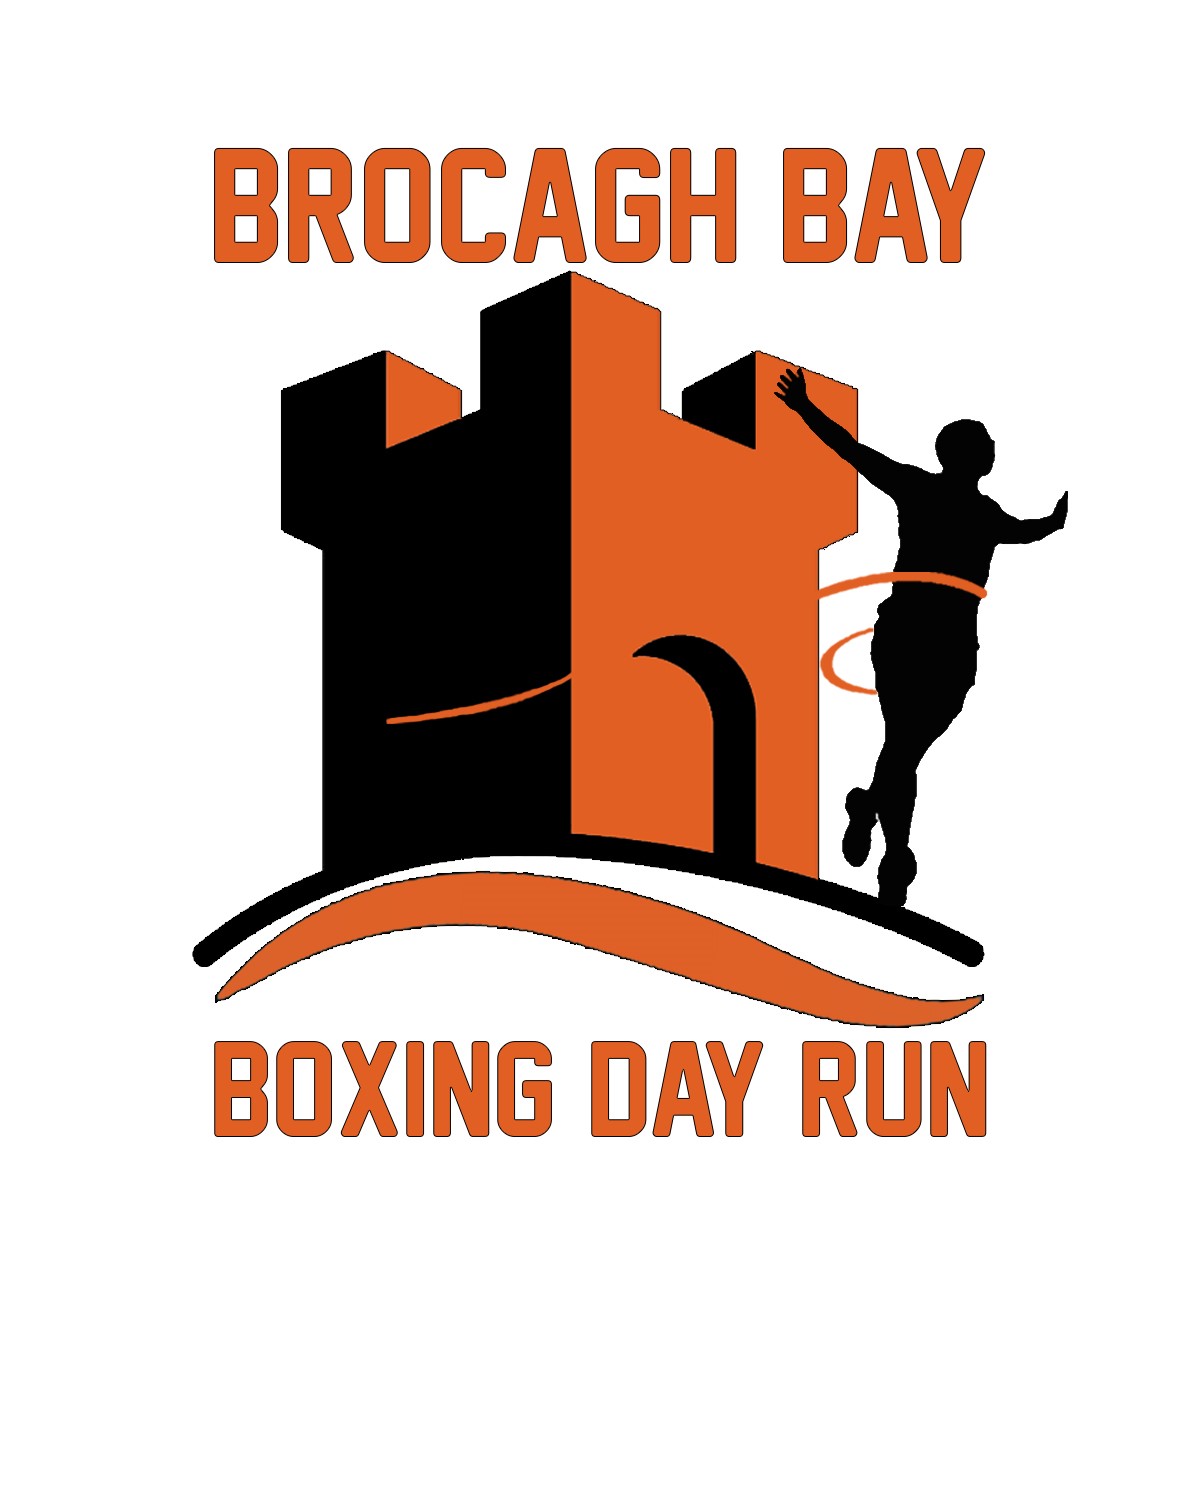 Brocagh Bay Boxing Day Run